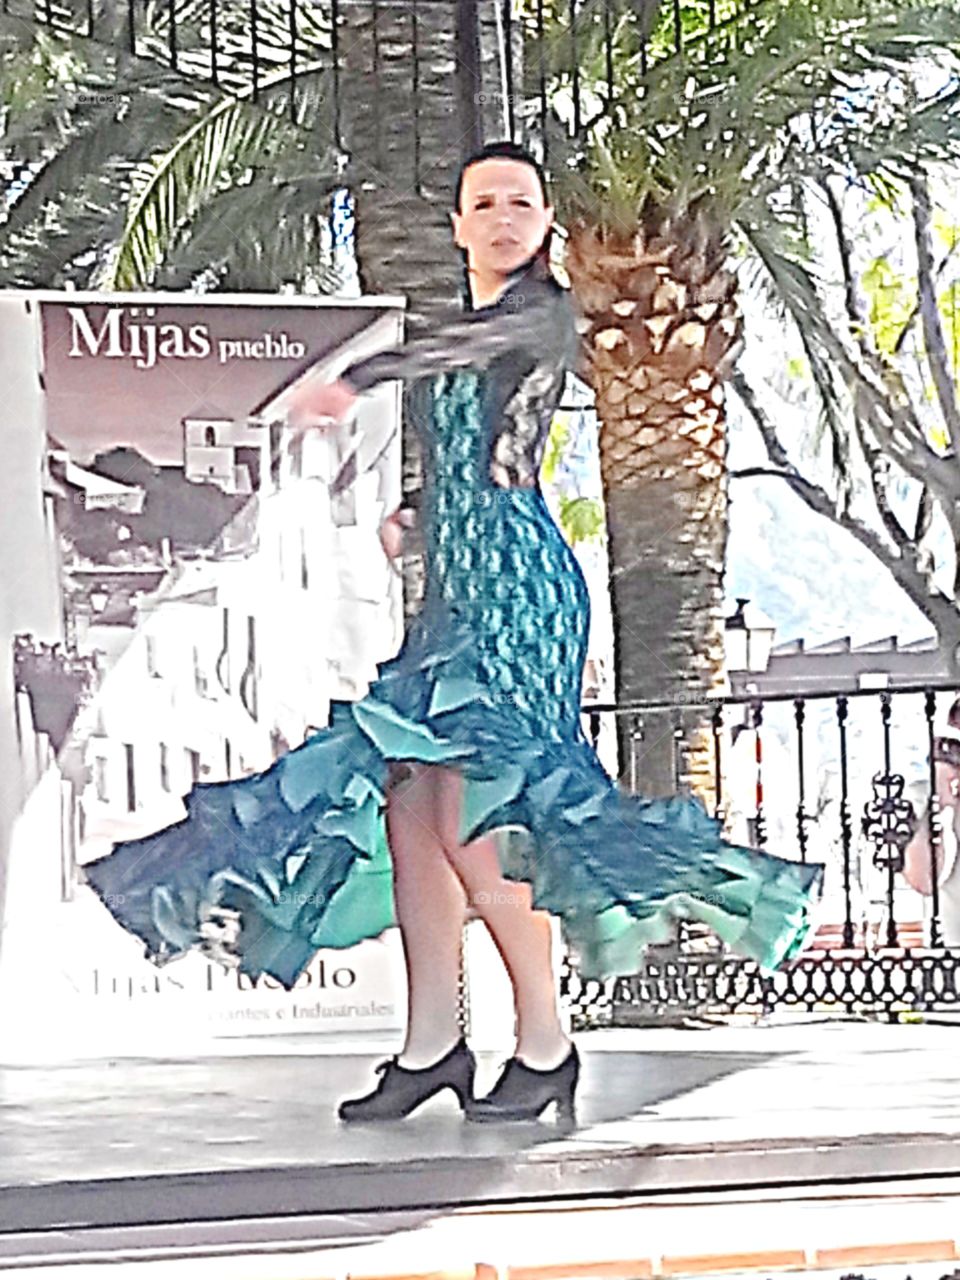 Flamenco dancer . Flamenco dancer during show in Mijas Pueblo 